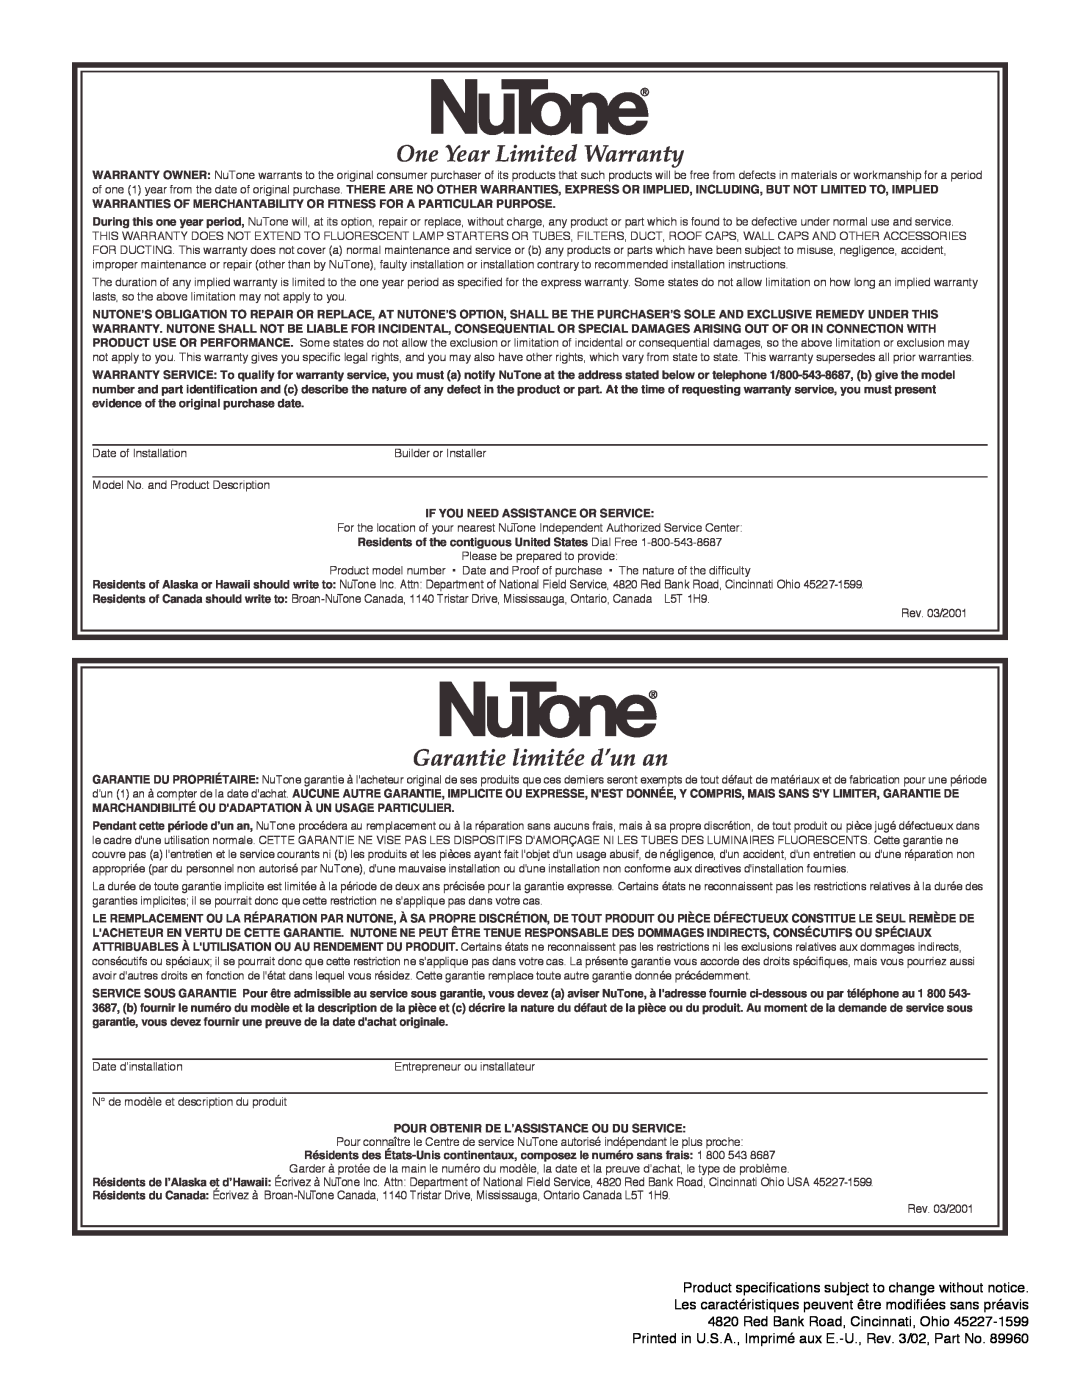 NuTone ILF360, ILF530 important safety instructions One Year Limited Warranty, Garantie limitée d’un an 